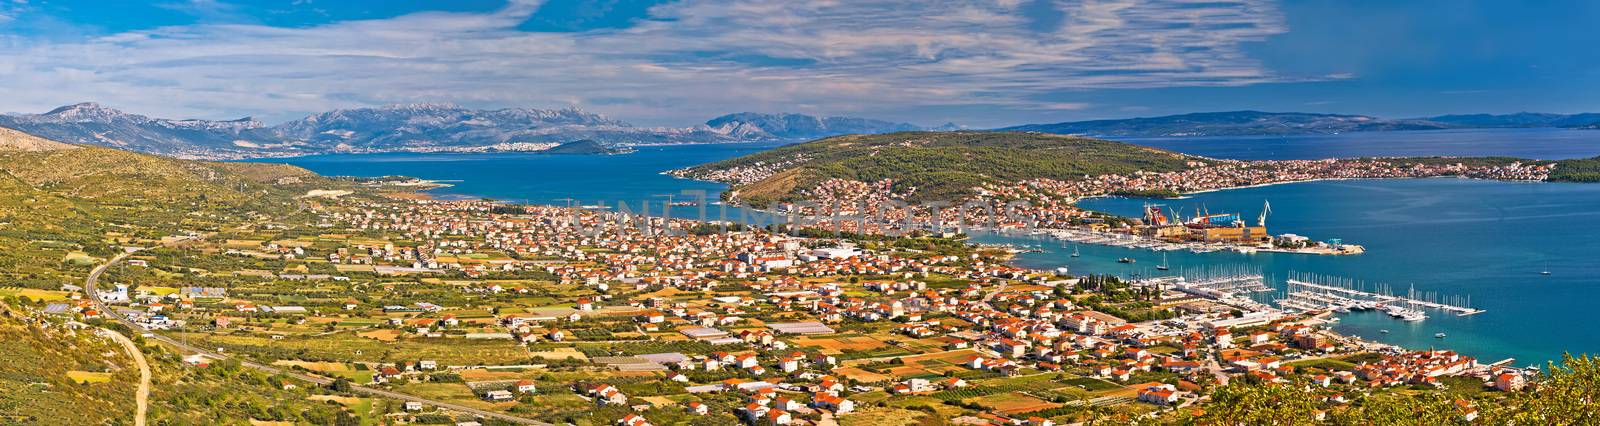 Panoramic view of Trogir from above with Kastela bay, island Ciovo, Biokovo mountain and city of Split, Dalmatia, Croatia